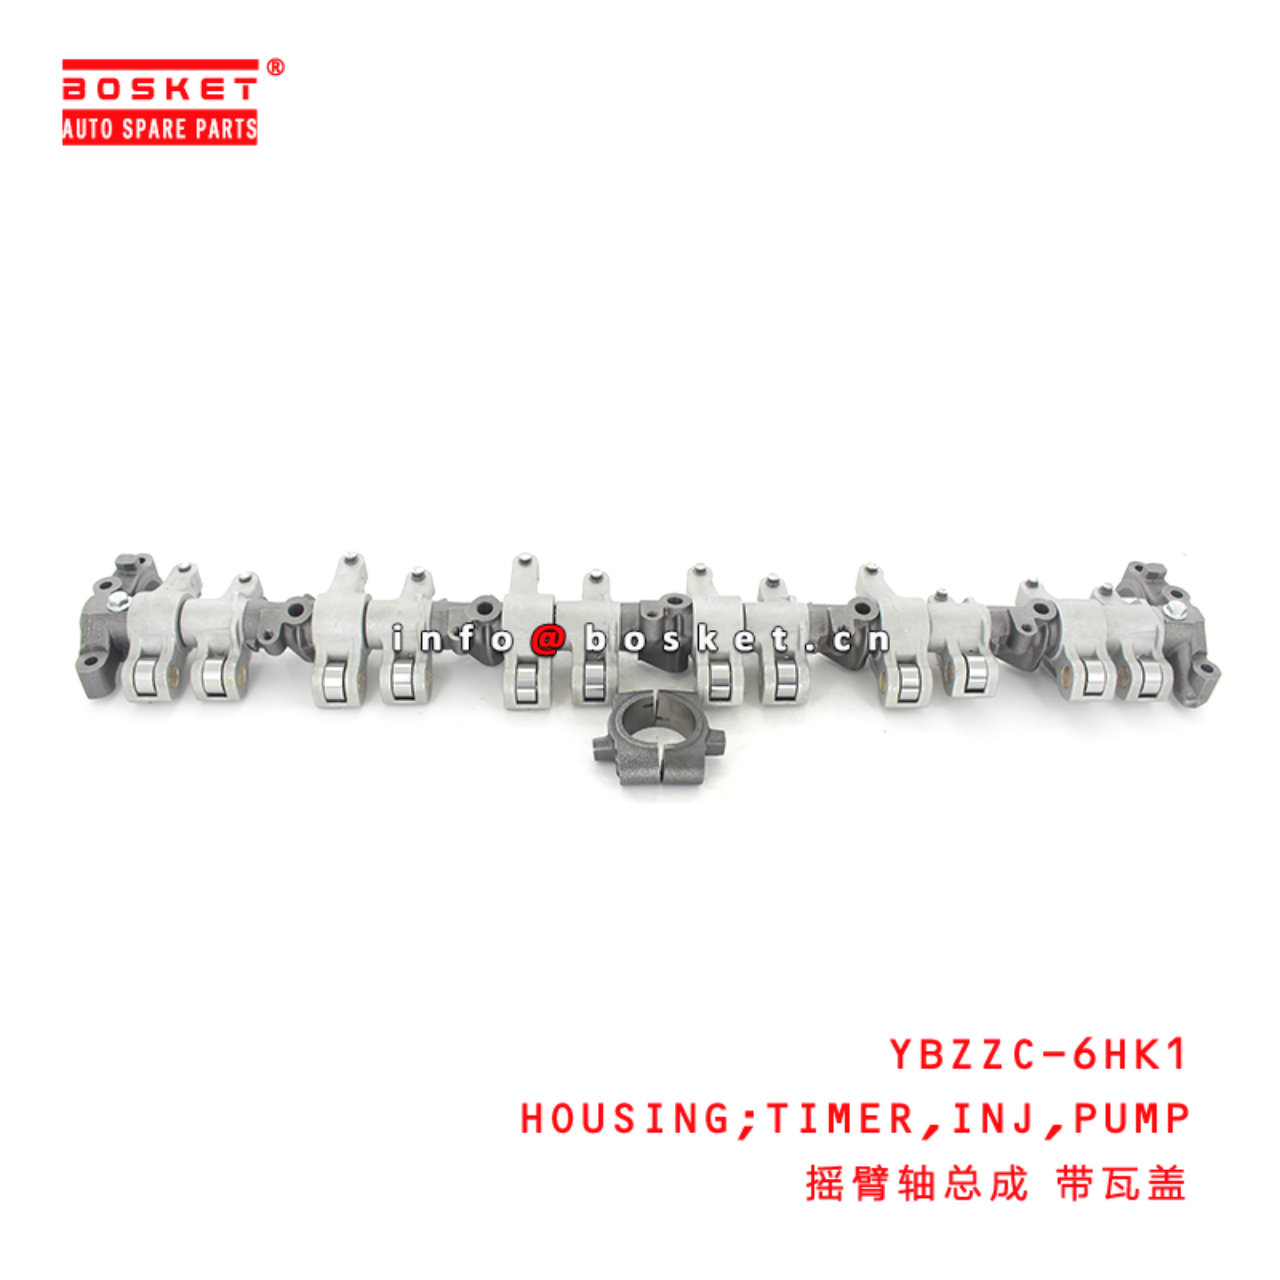 YBZZC-6HK1 Pump Injection Timer Housing Suitable f...